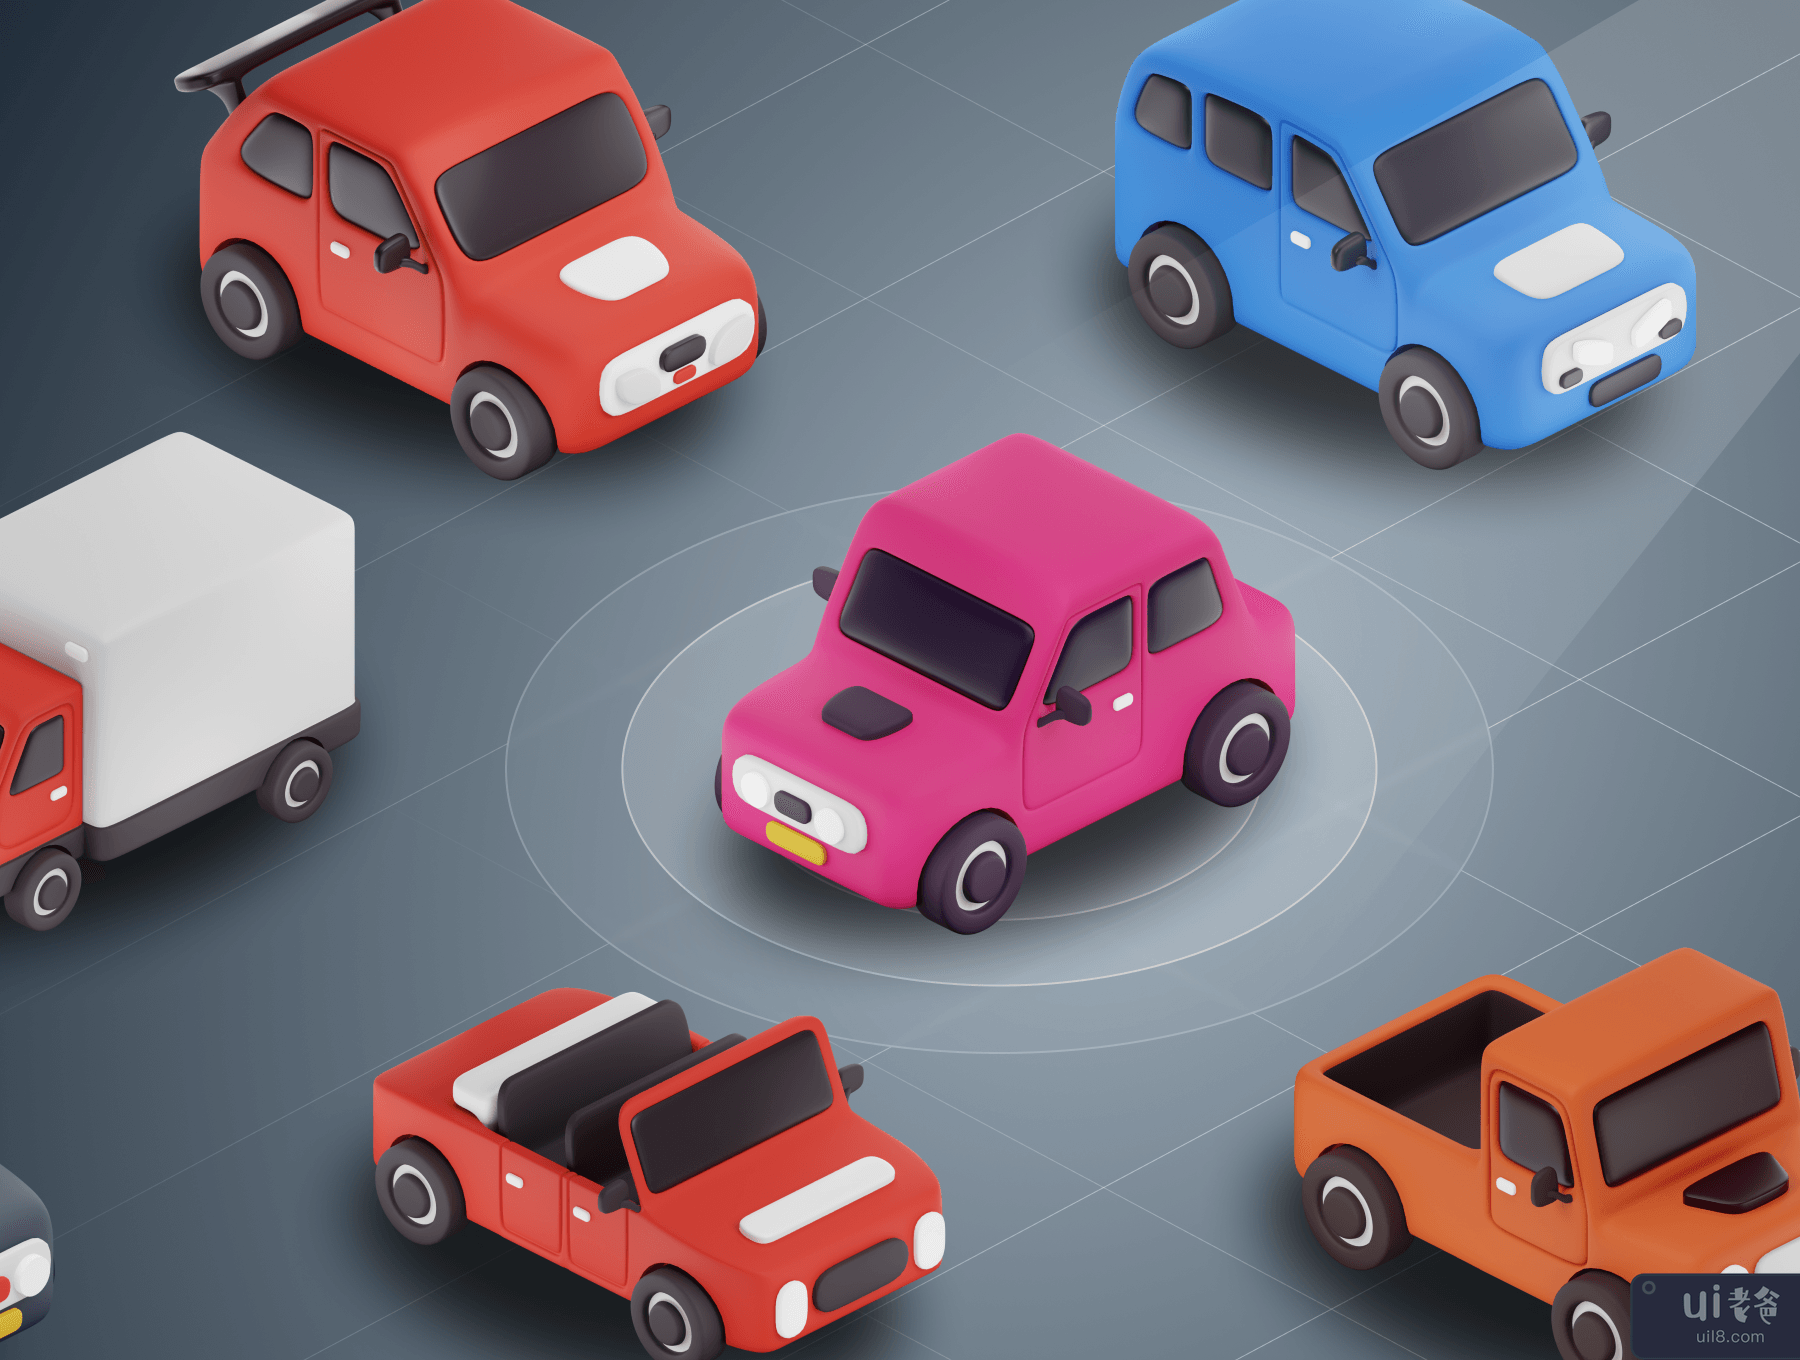 Carly - 汽车和交通工具 3D 图标集 (Carly - Car & Vehicle 3D Icon Set)插图